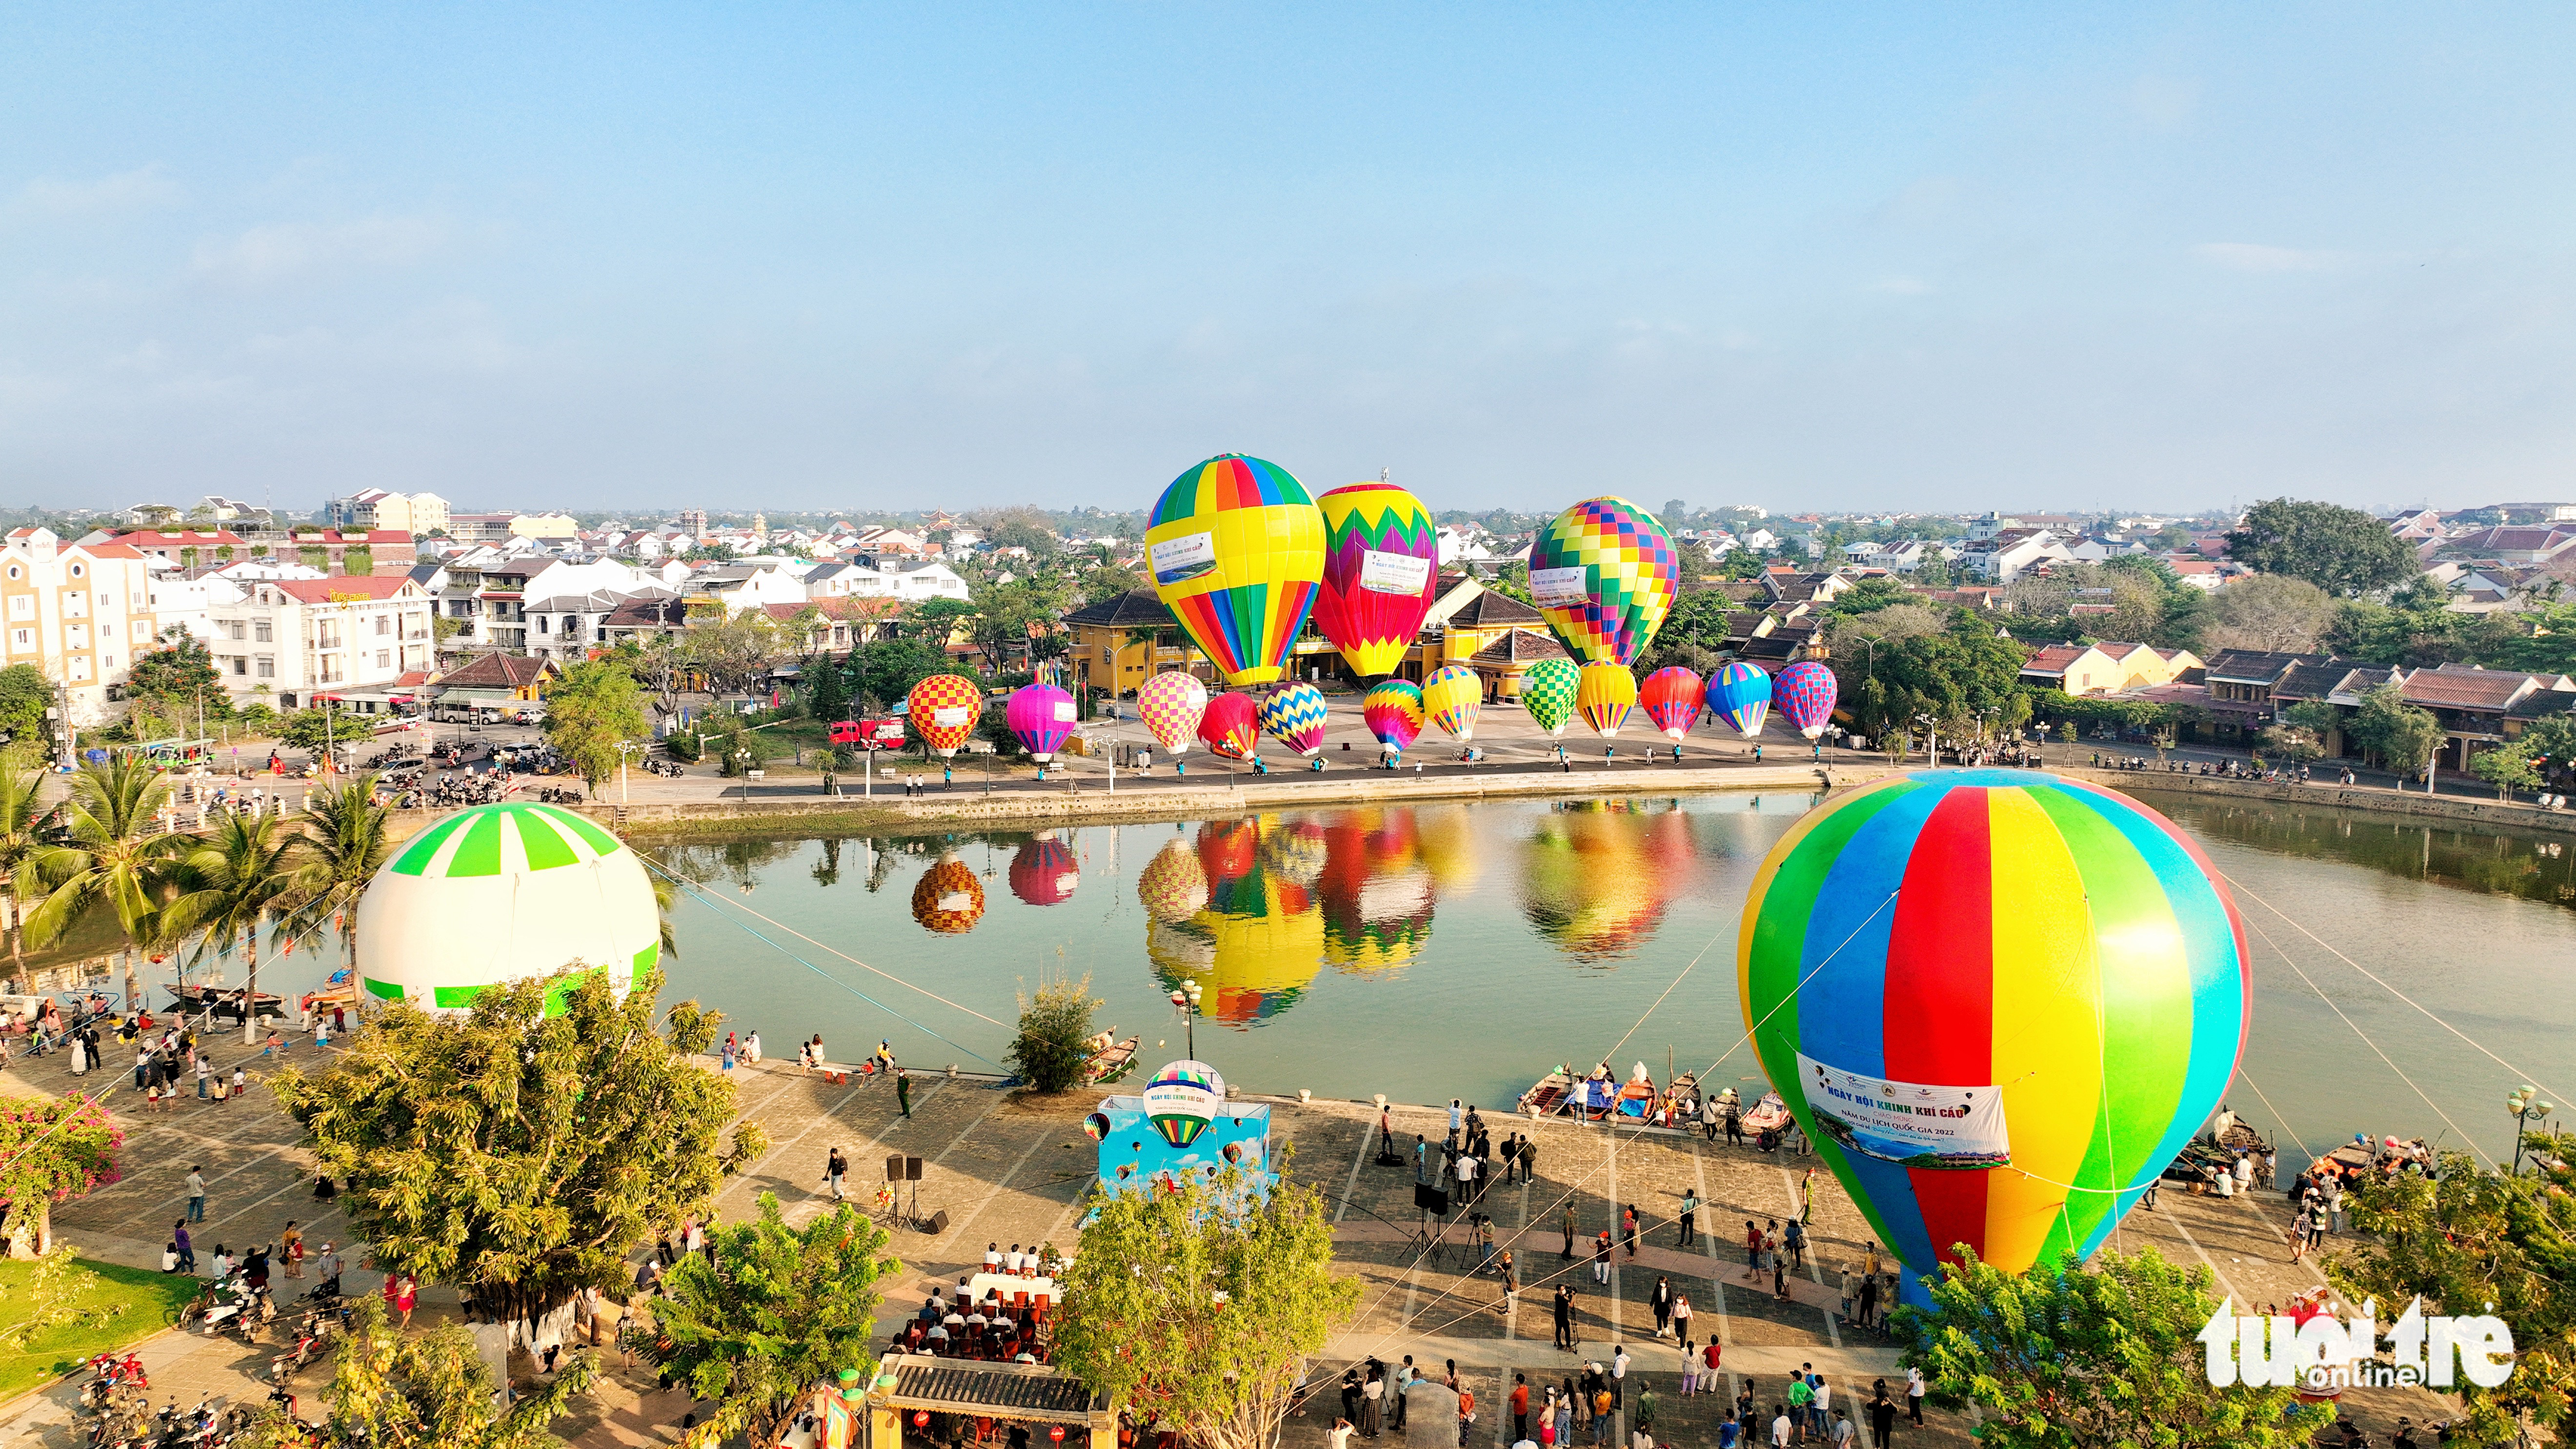 Hot-air balloons illuminate the sky above Hoi An's tourism